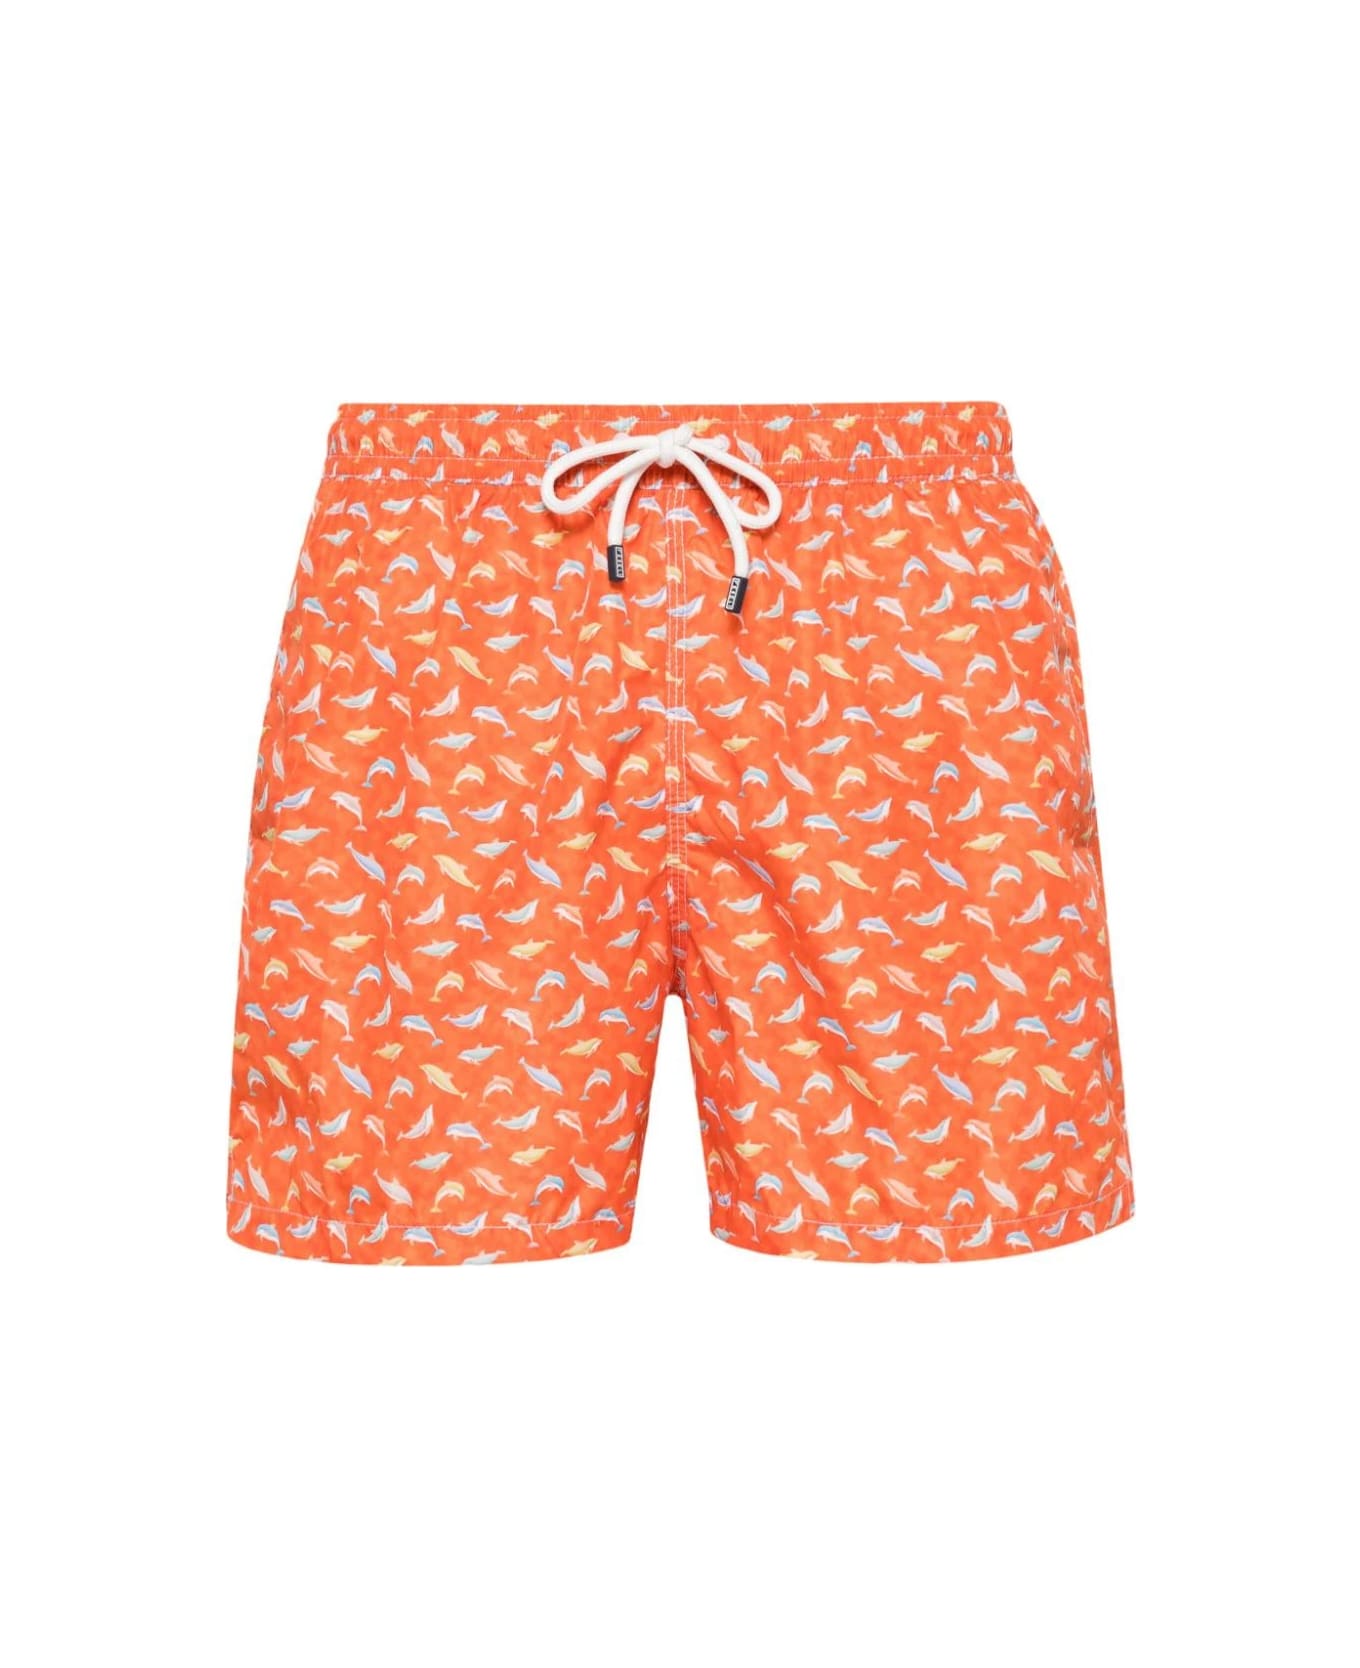 Fedeli Orange Swim Shorts With Dolphin Pattern - Orange